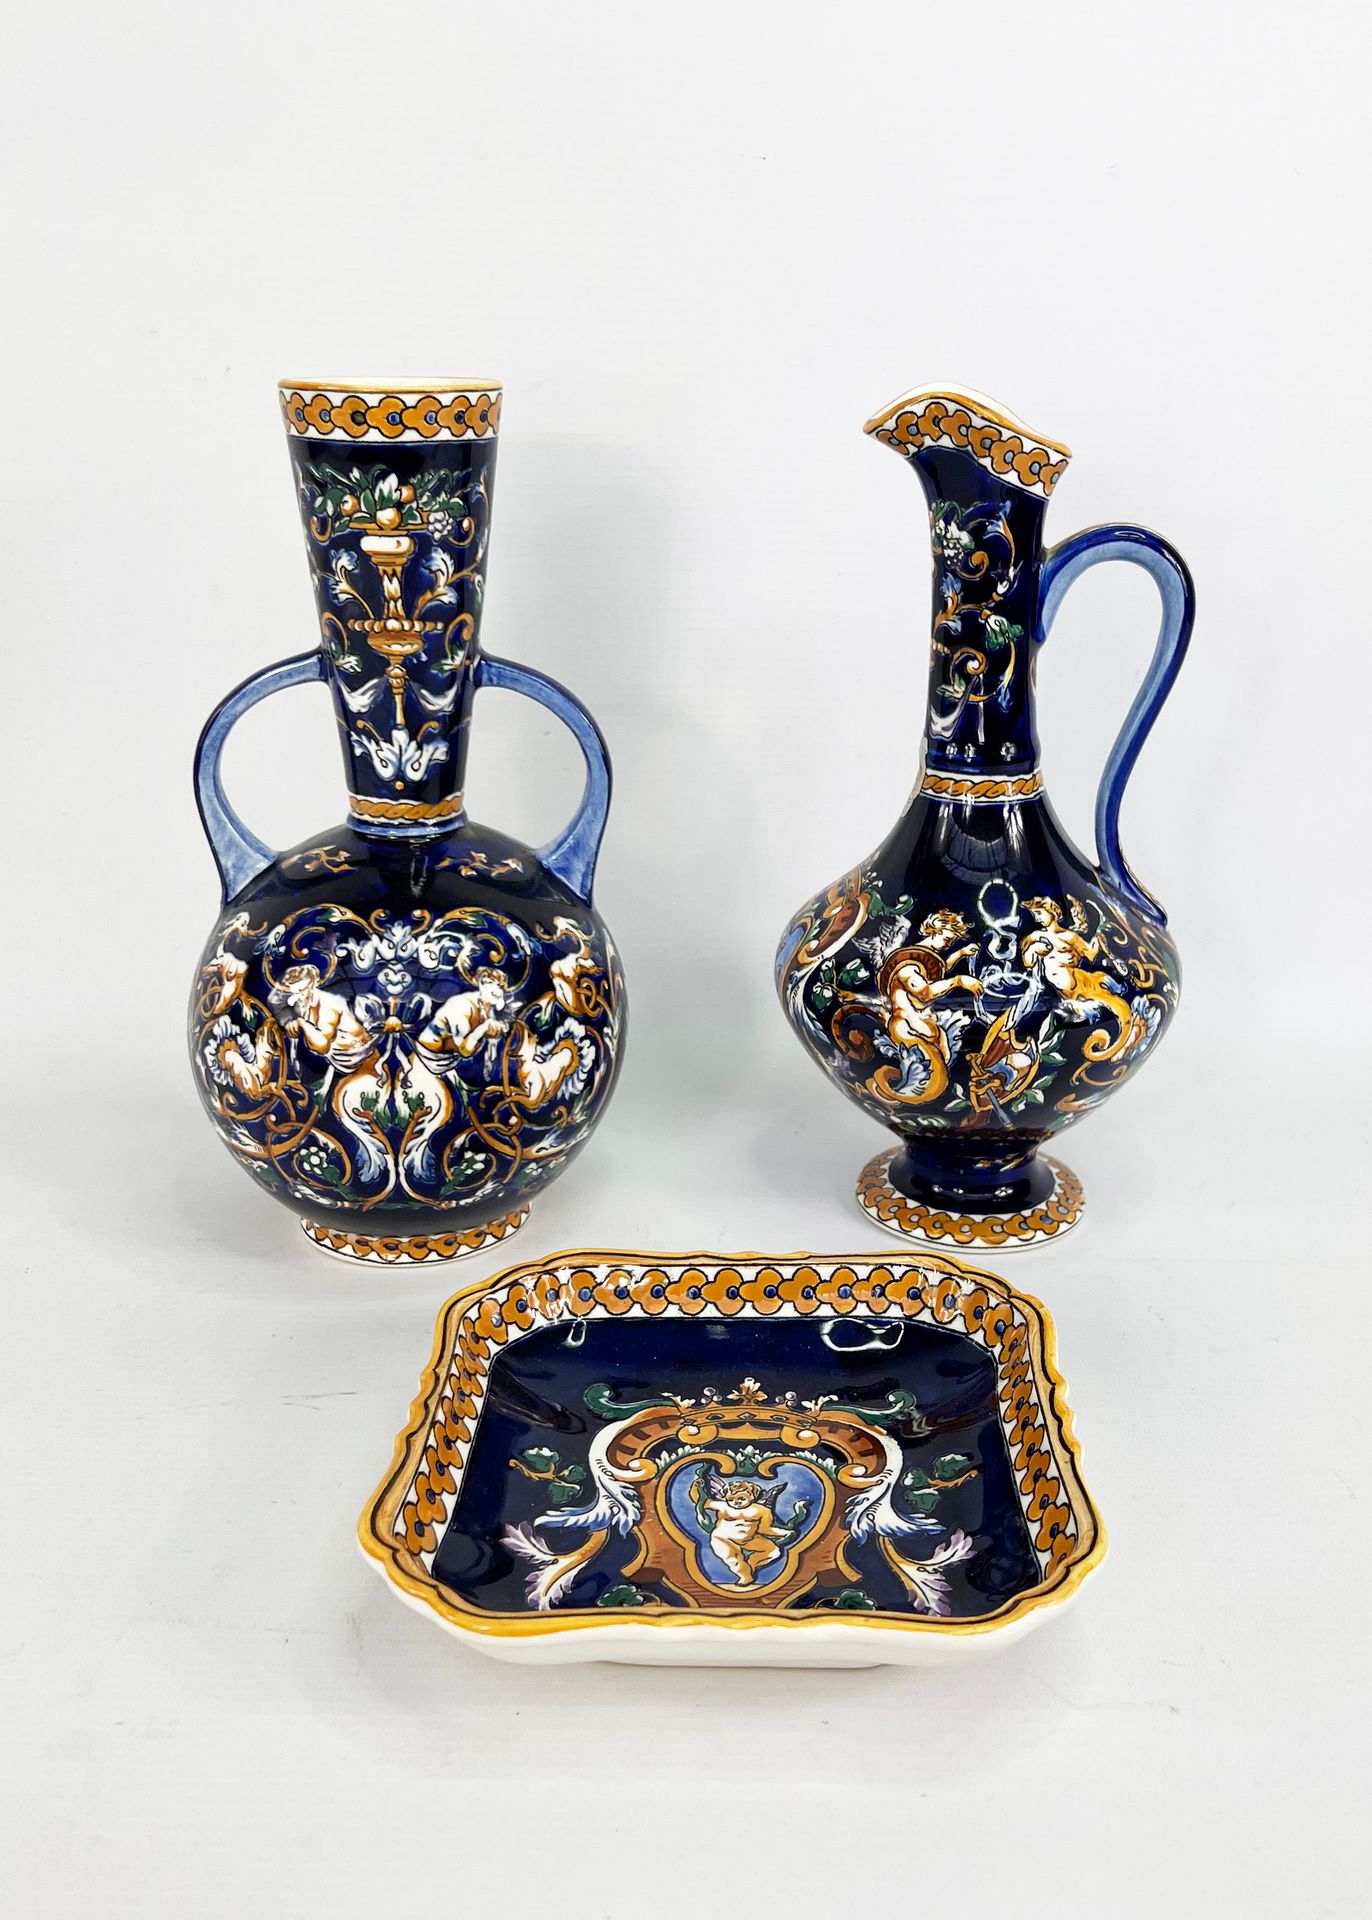 Null GIEN

陶器套装包括一个带手柄的花瓶，一个水壶和一个方碗，蓝底文艺复兴时期的装饰。

直径15至25厘米